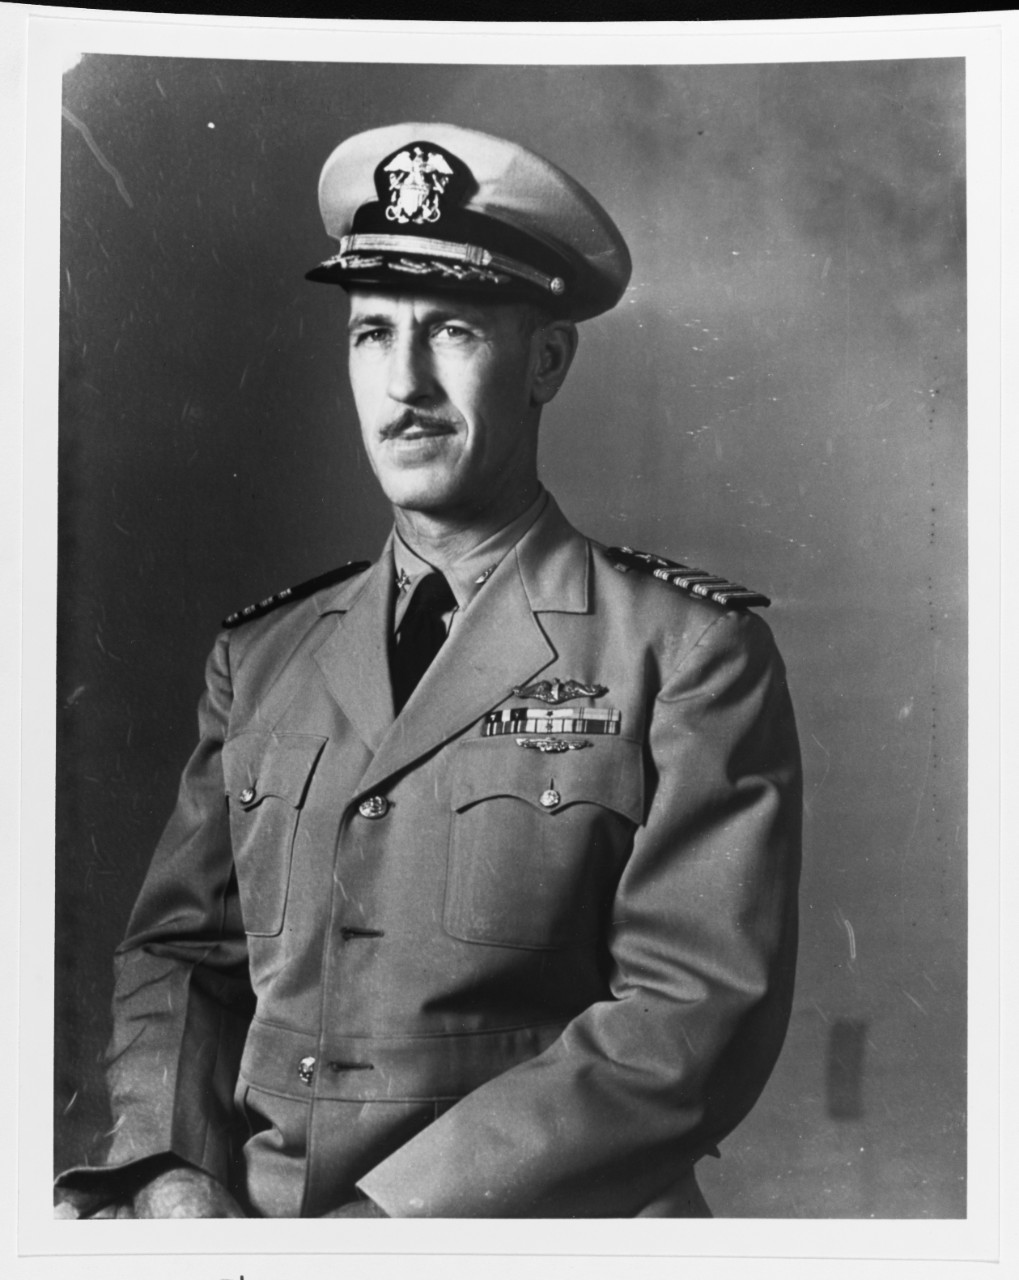 Captain Gordon Waite Underwood, USN